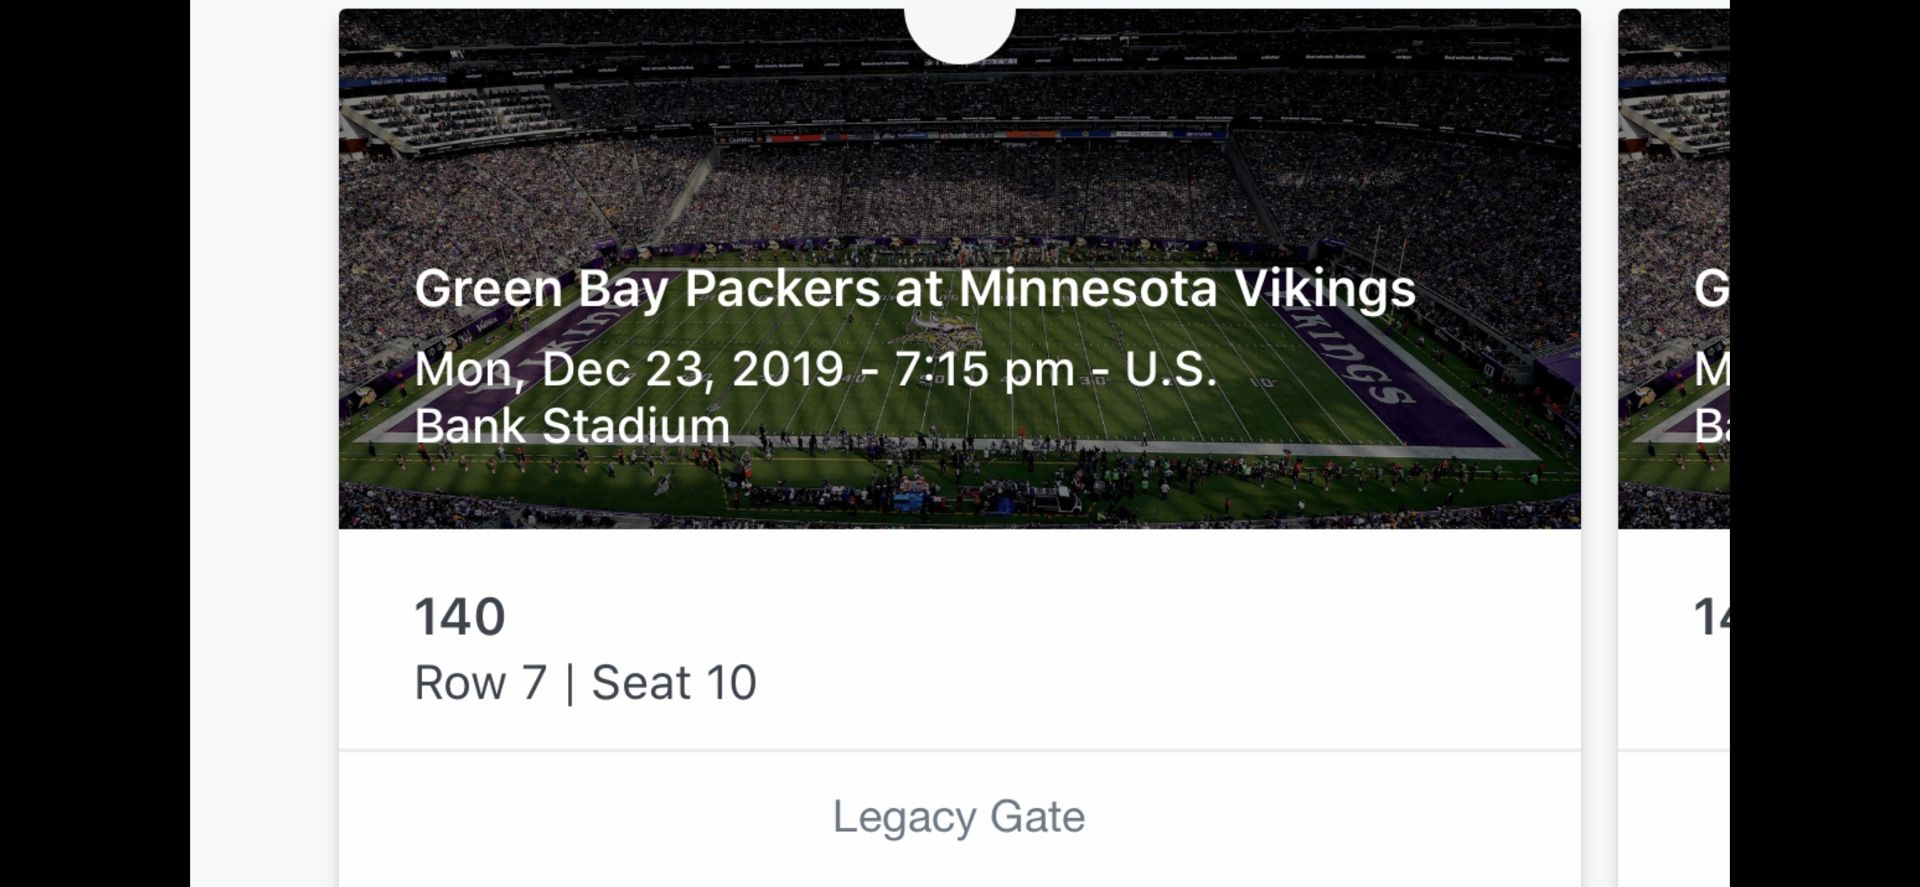 Vikings vs Packers 12-23-19 Monday Night Football $300 each